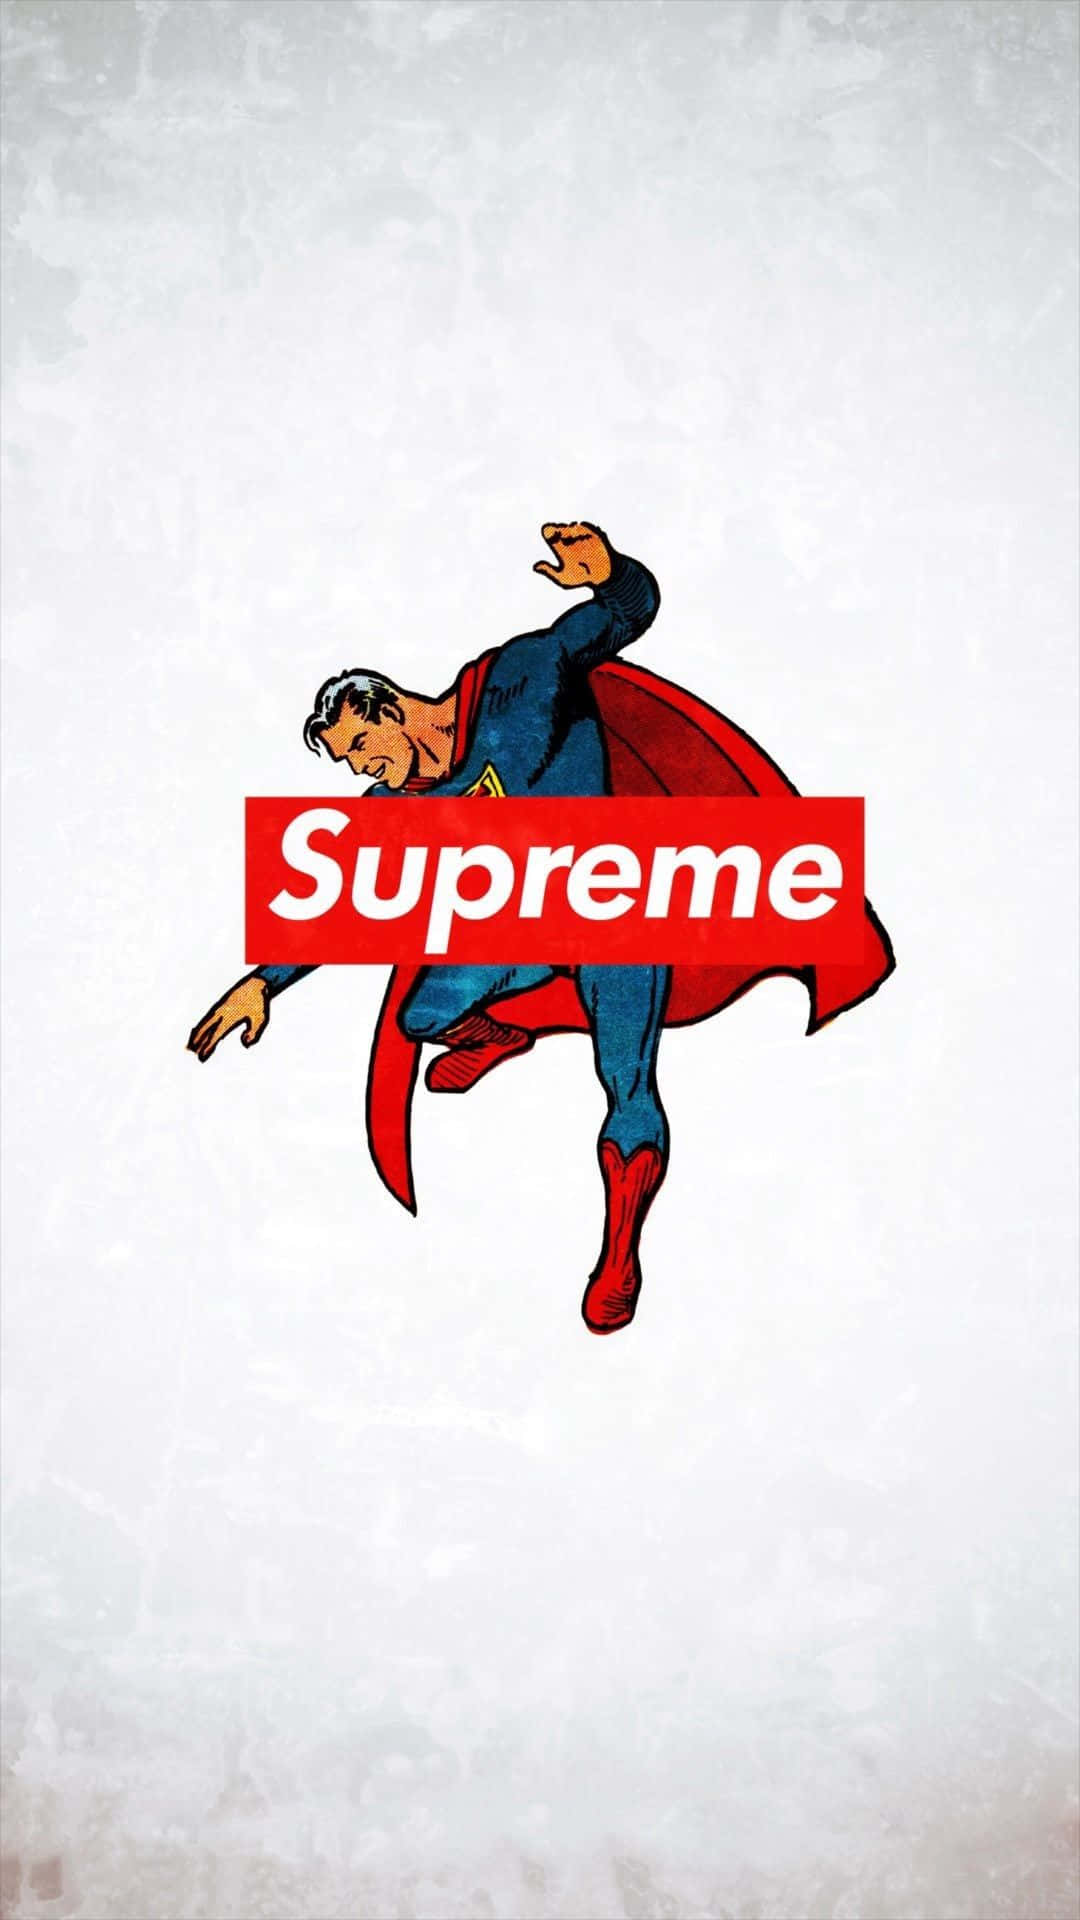 Free Supreme Cartoon Wallpaper Downloads, [100+] Supreme Cartoon Wallpapers  for FREE 